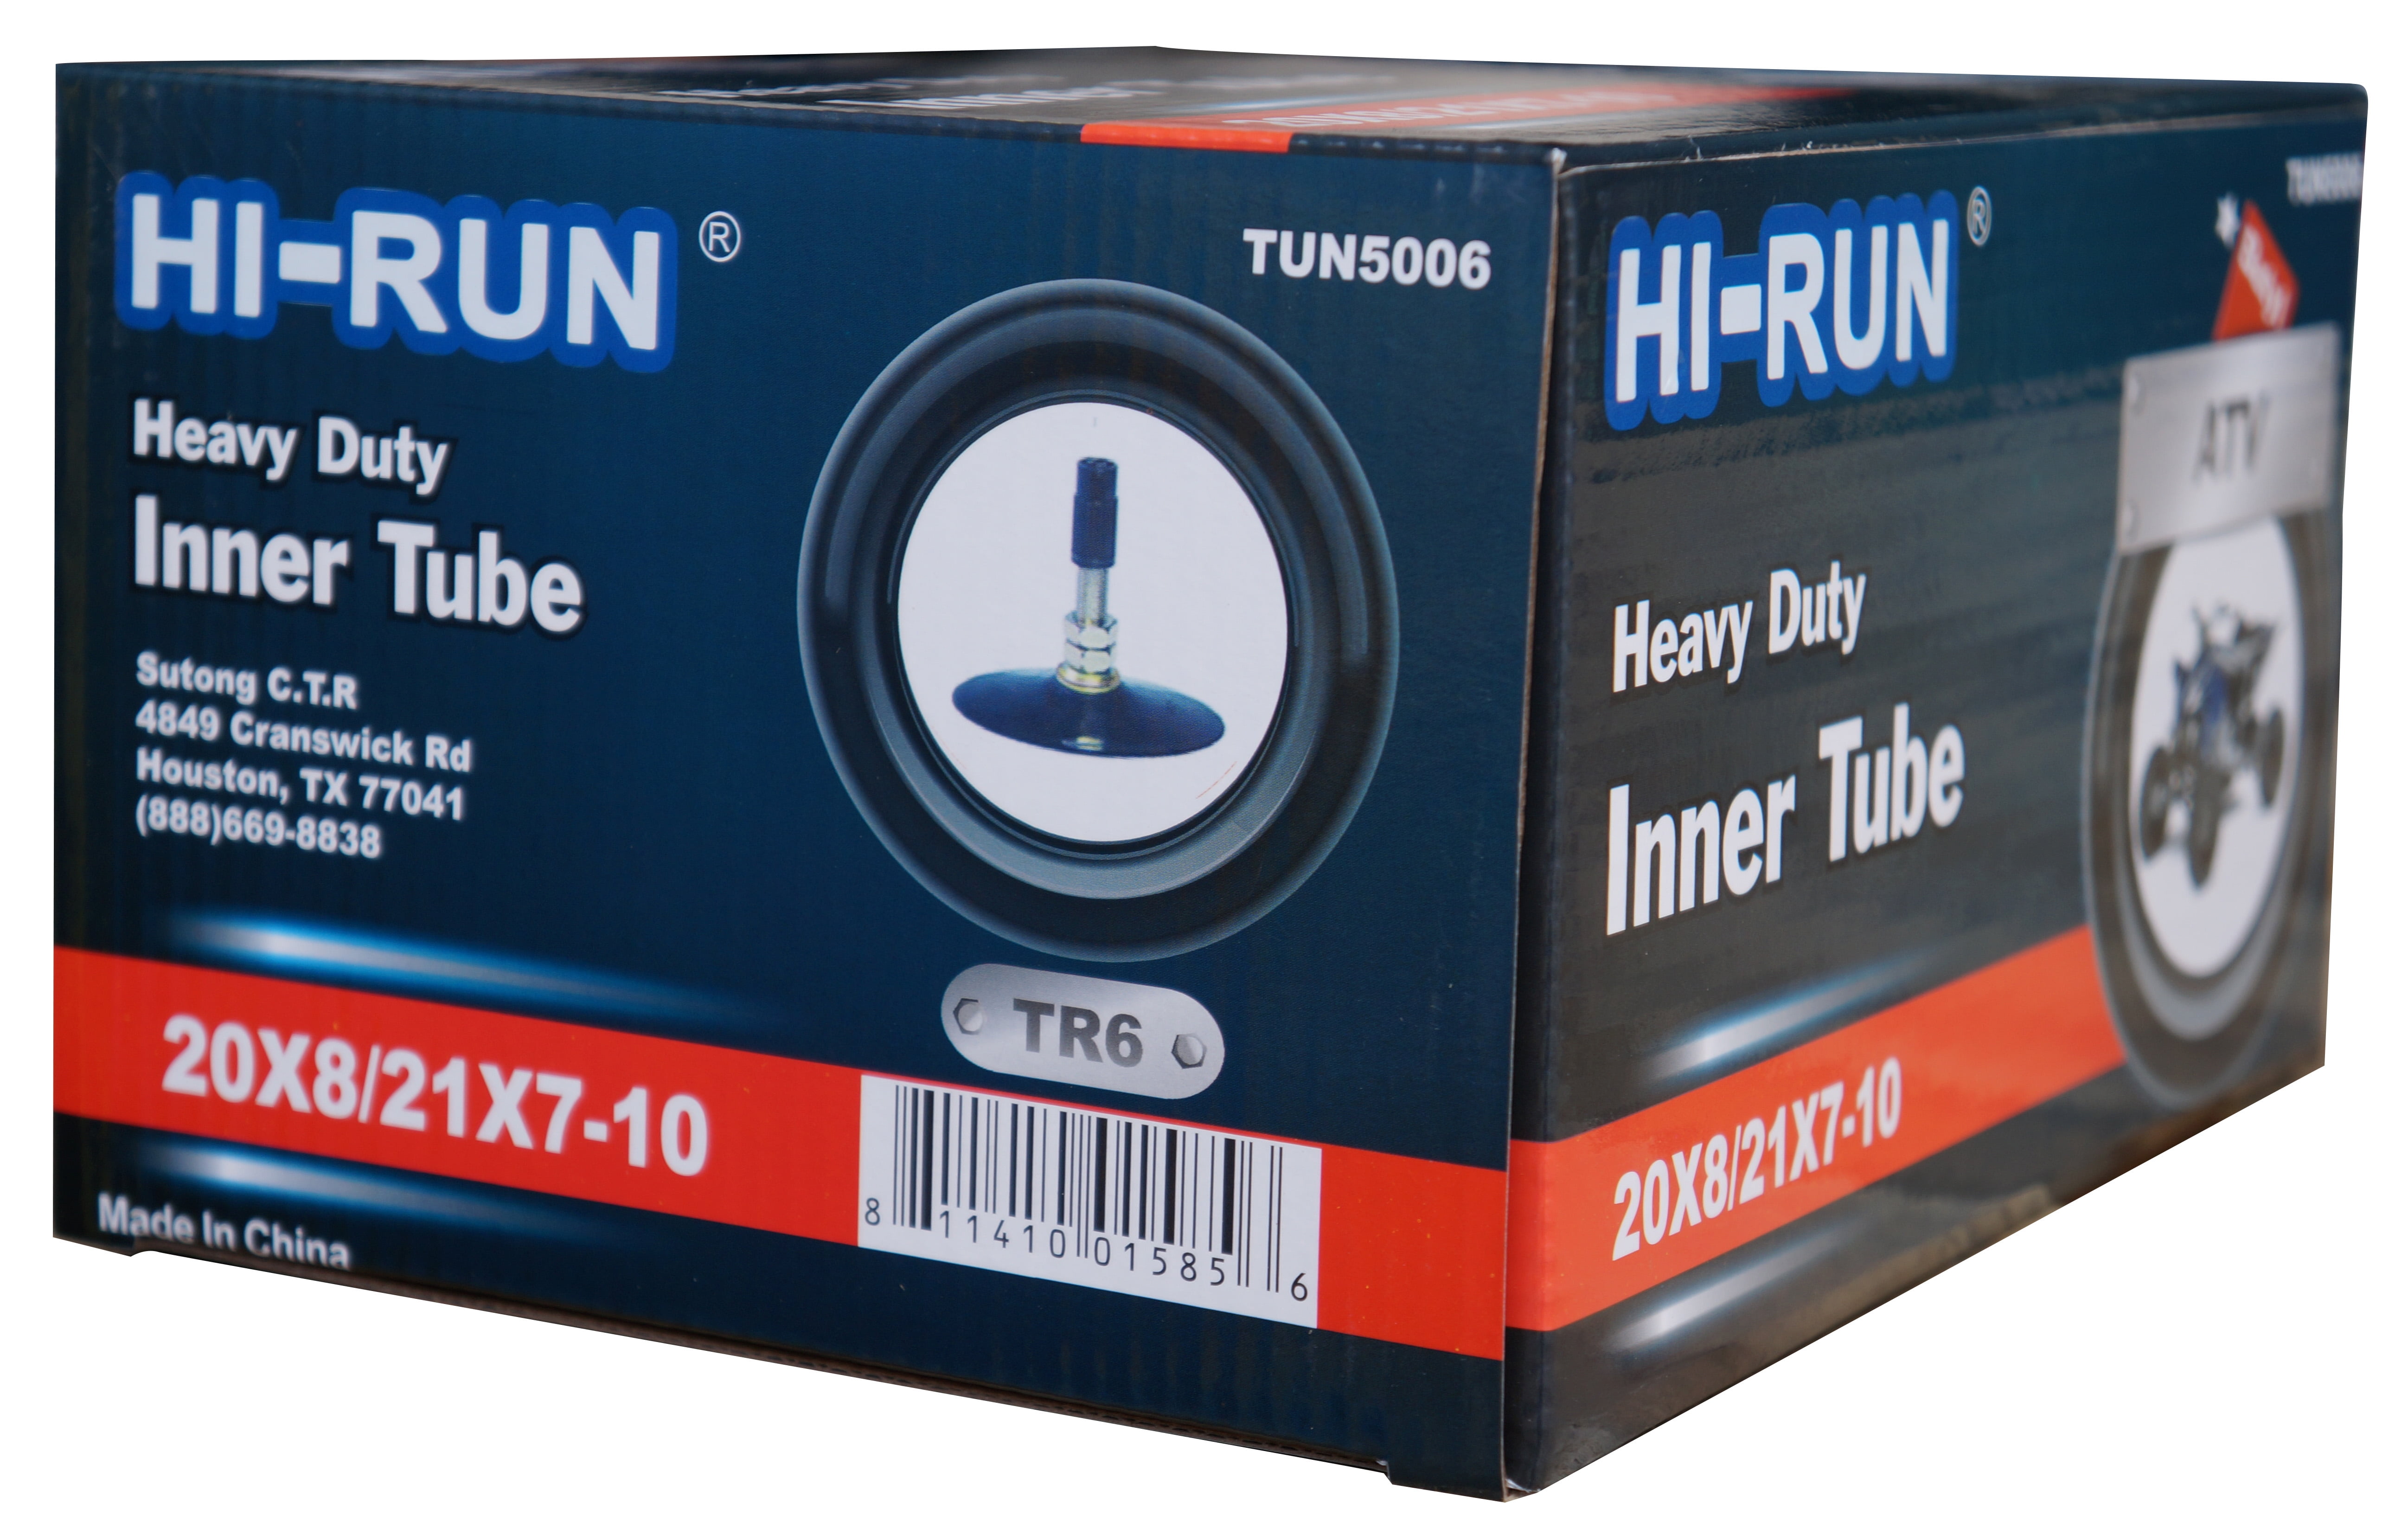 HI-RUN Heavy Duty Inner Tube Lawn/garden TUN4001 for sale online 